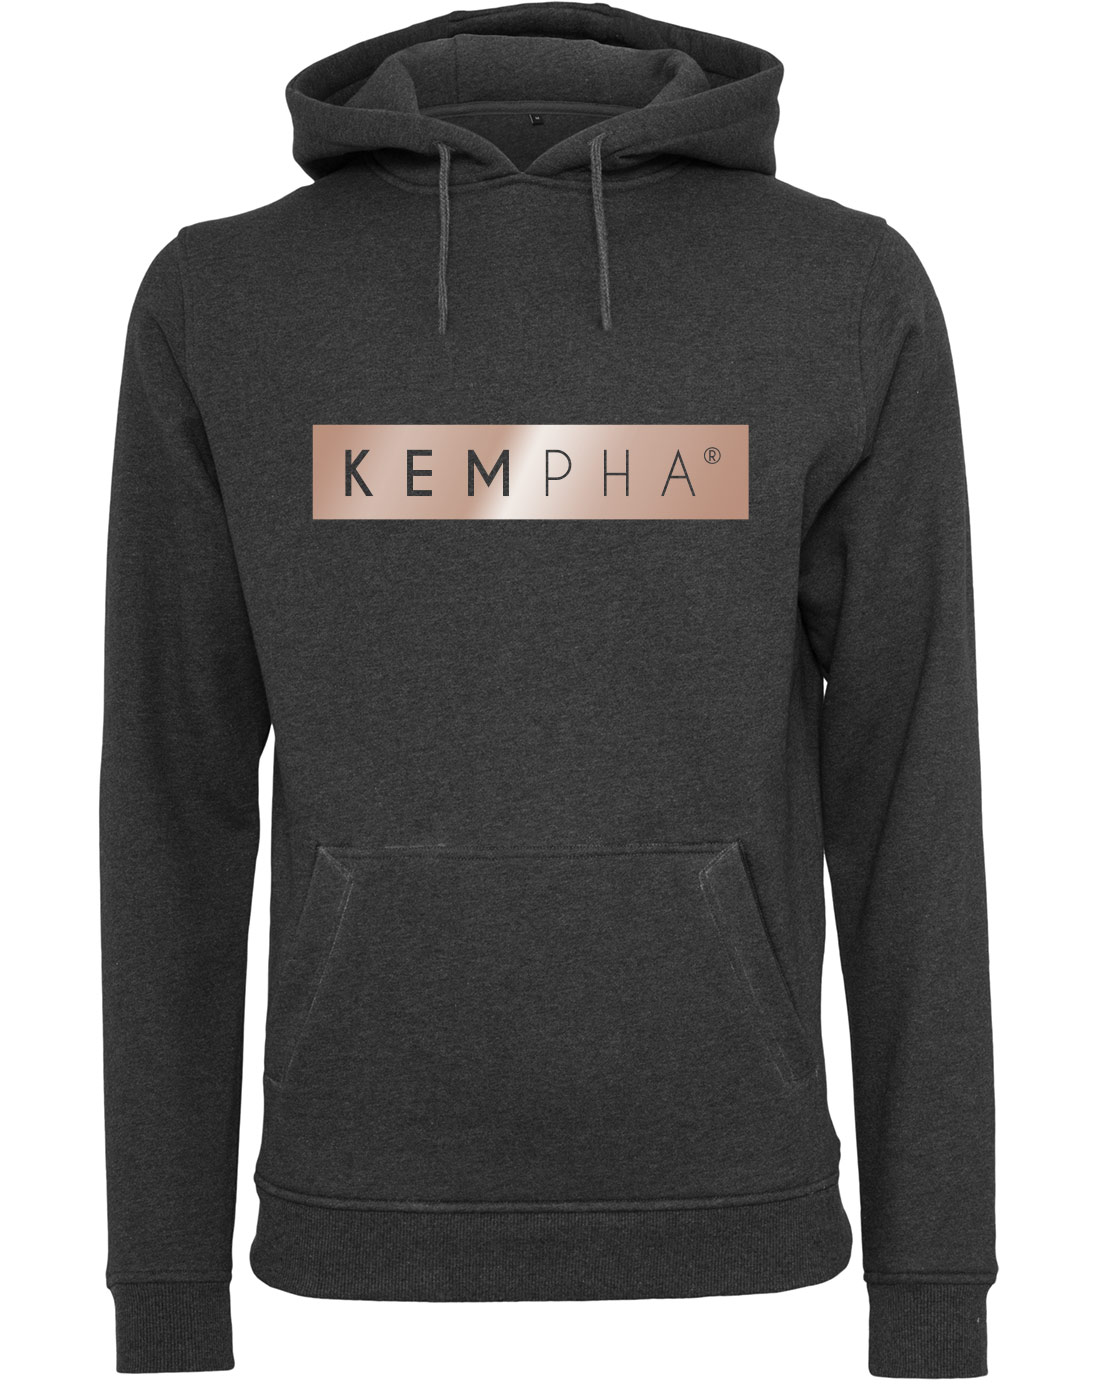 Kempha Premium Hoodie ROSEgold auf charcoal